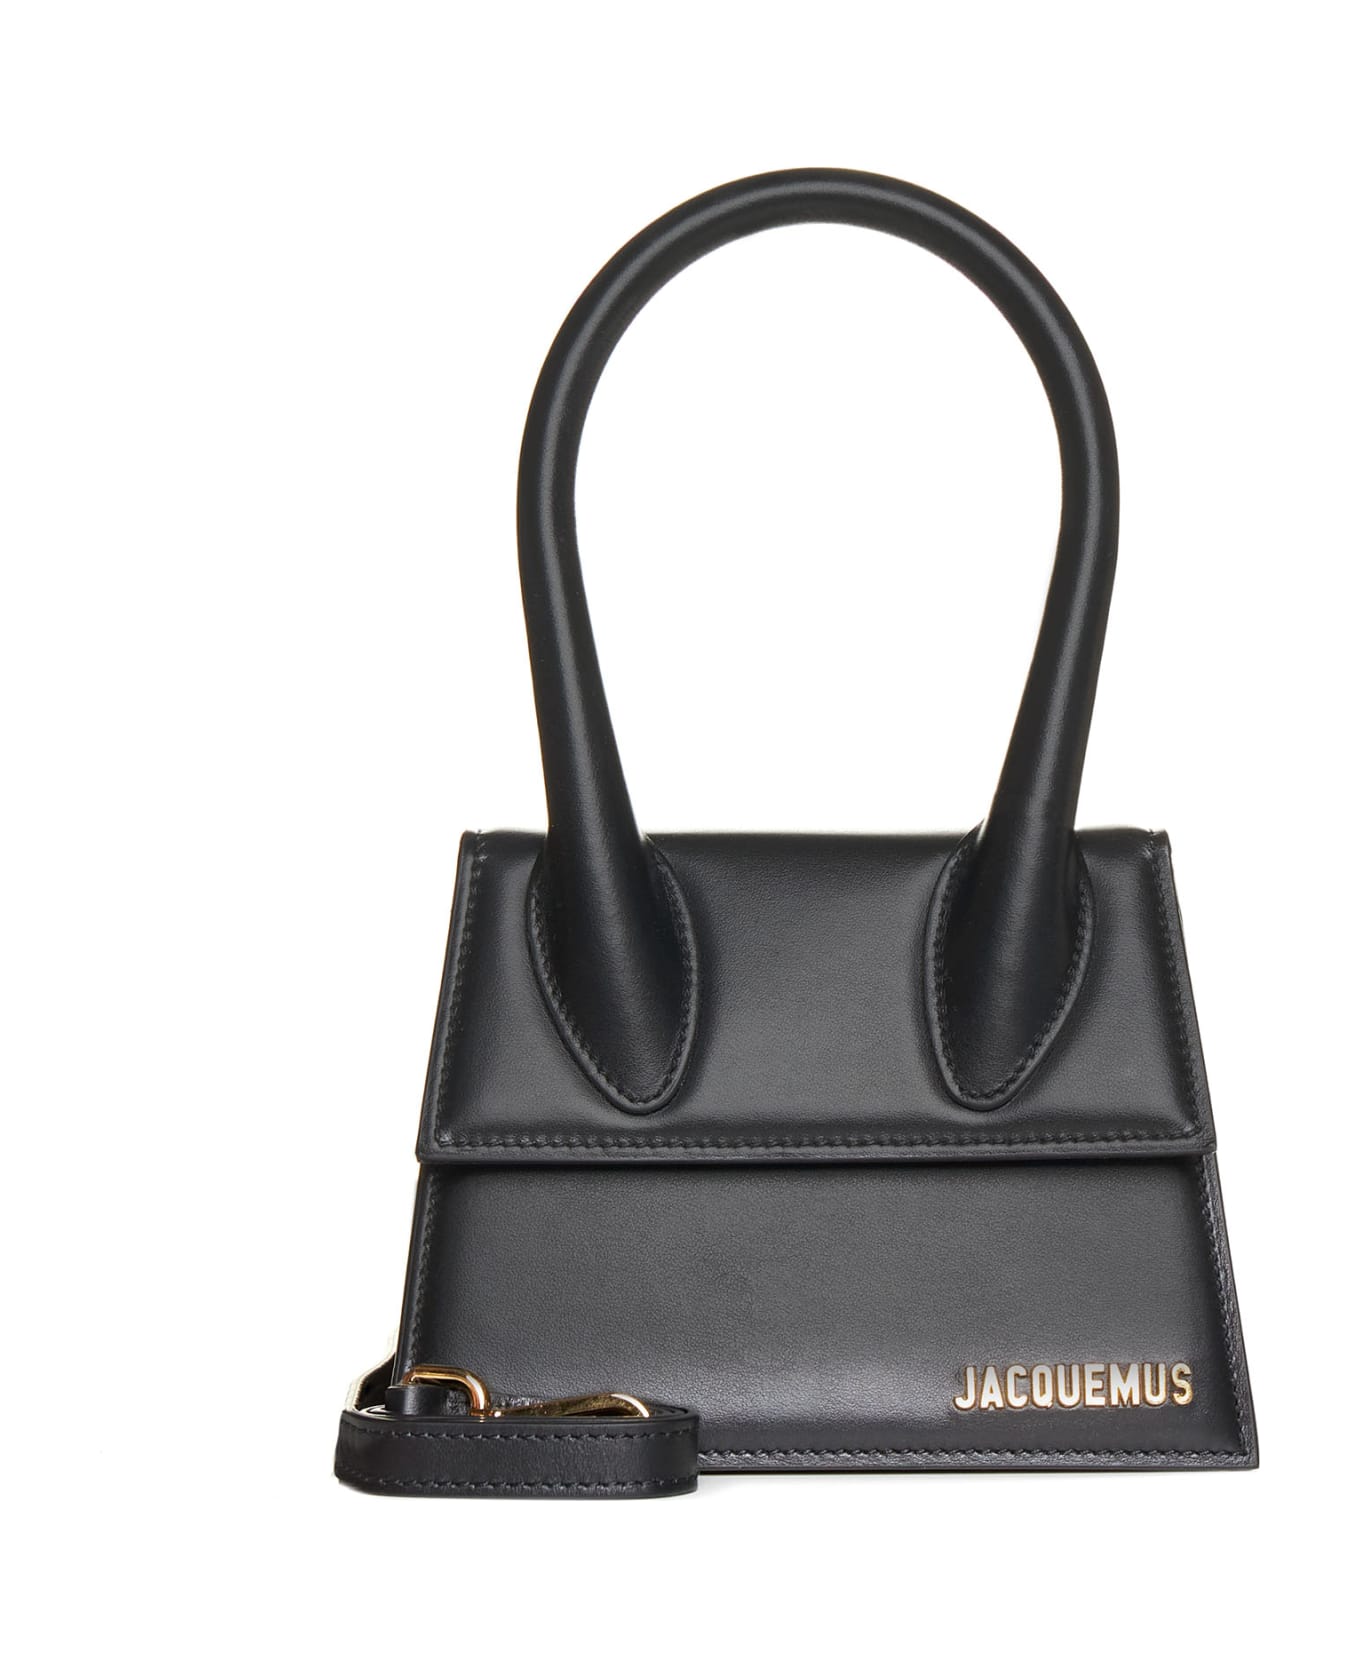 Jacquemus Le Chiquito Handbag - Black